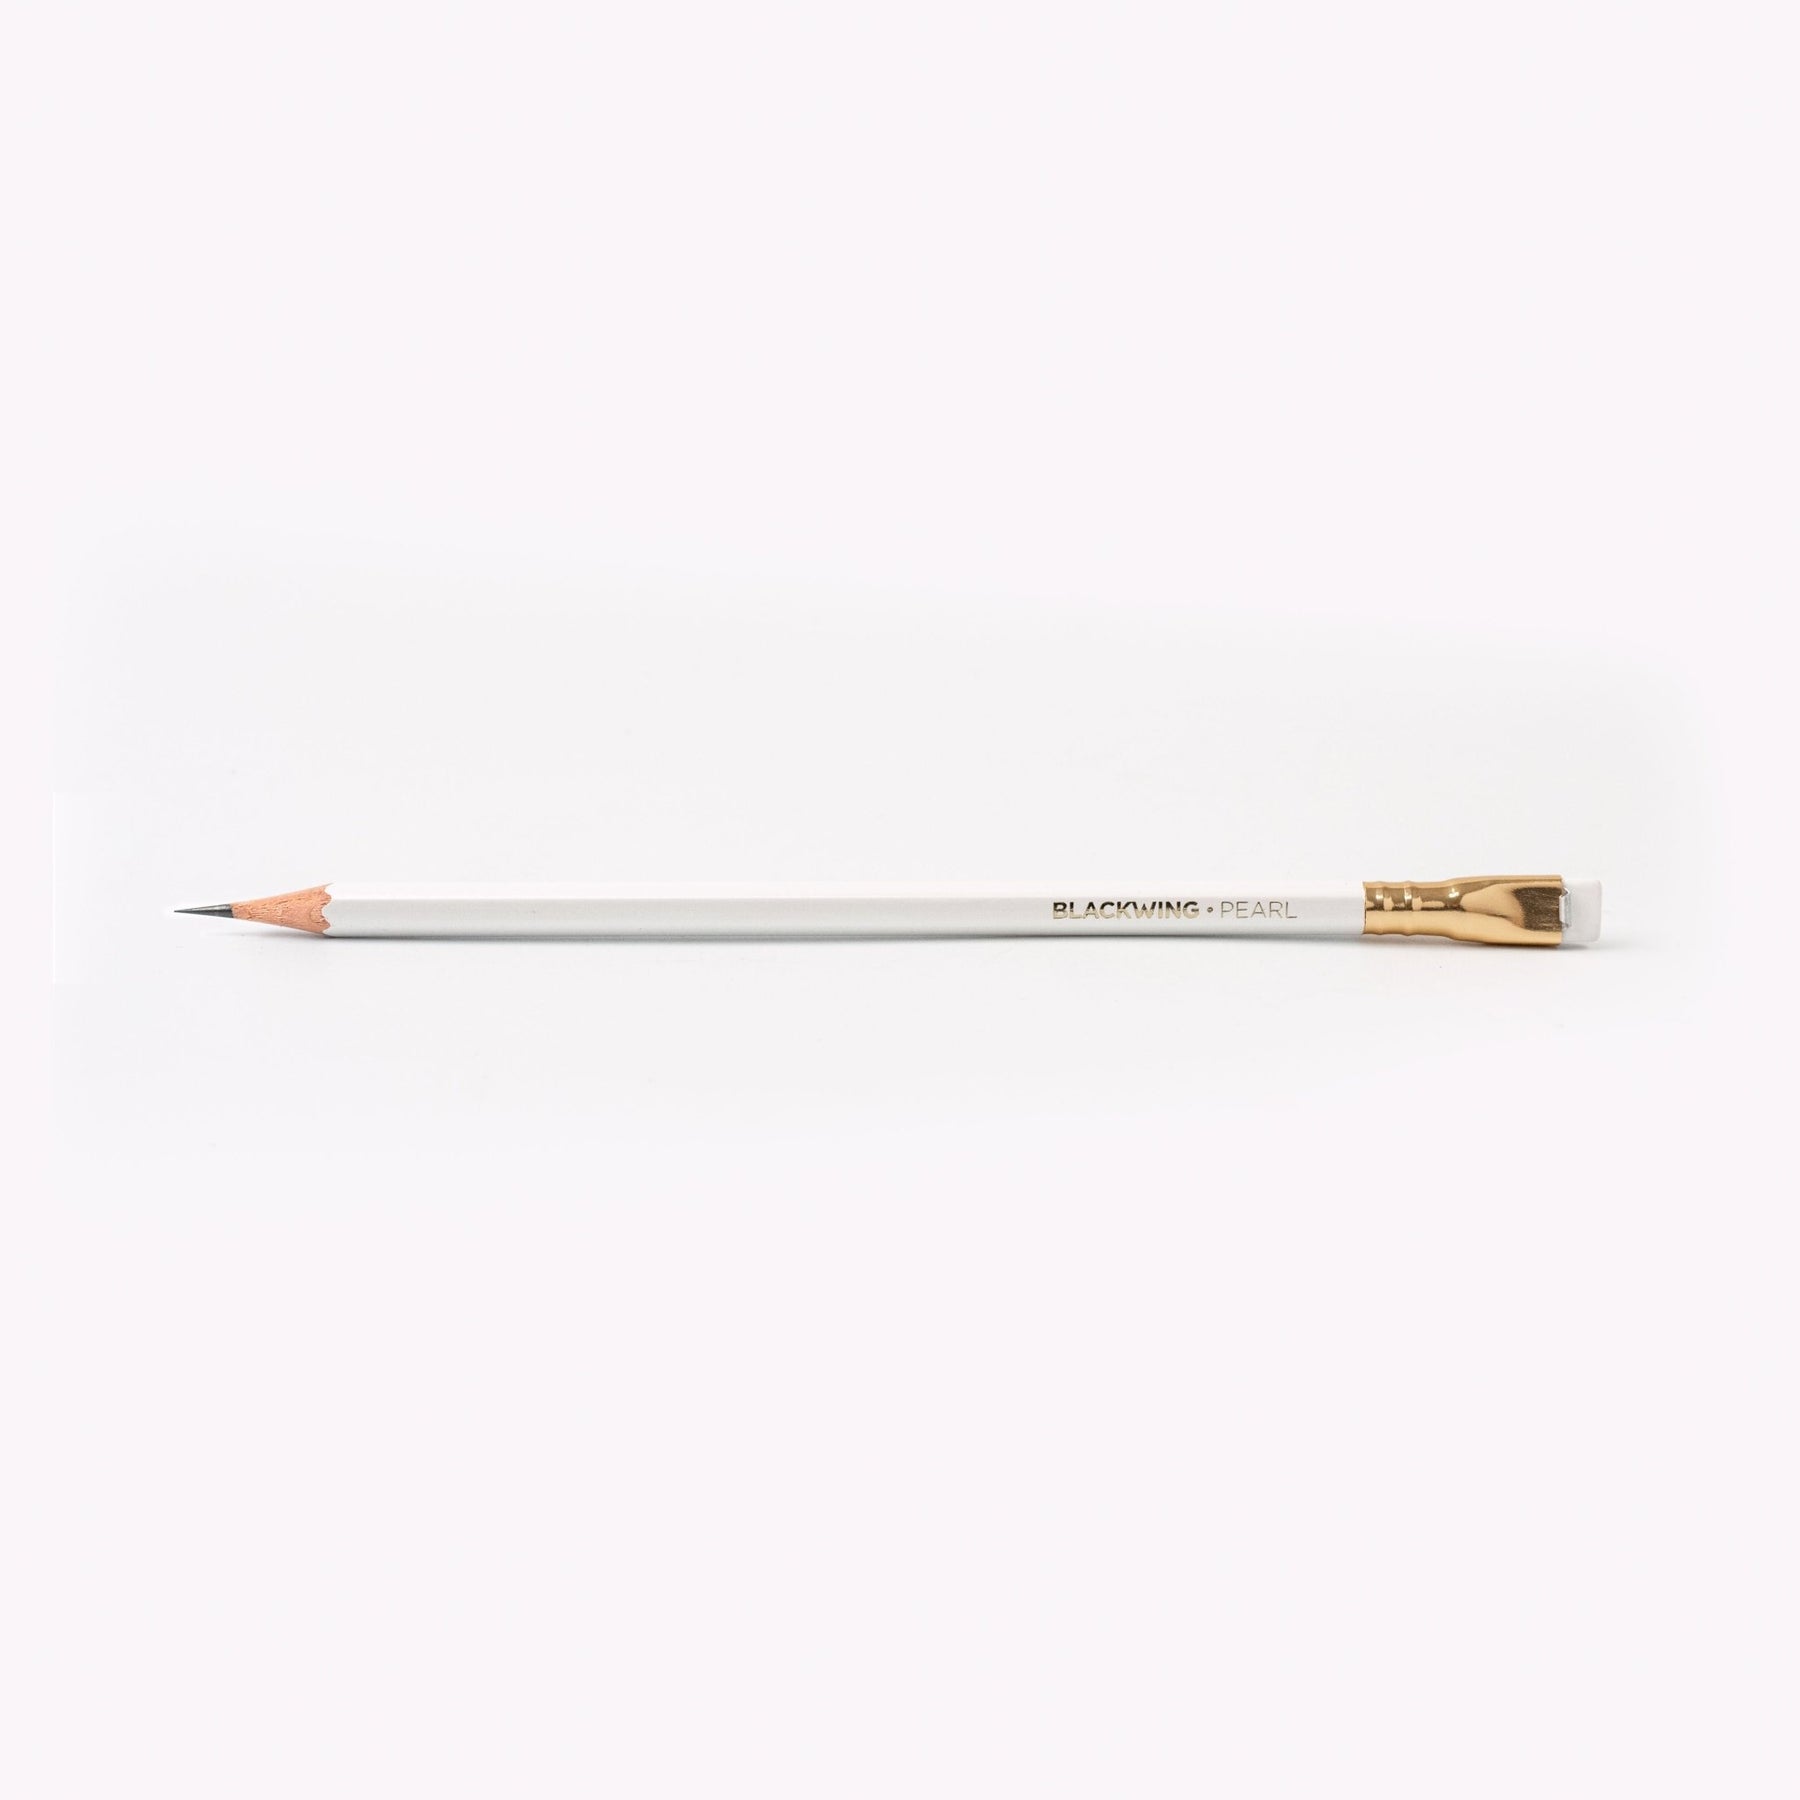 Palomino Blackwing Pearl Pencils - Medium Lead with White Eraser - Box of 12 Pencils - merriartist.com